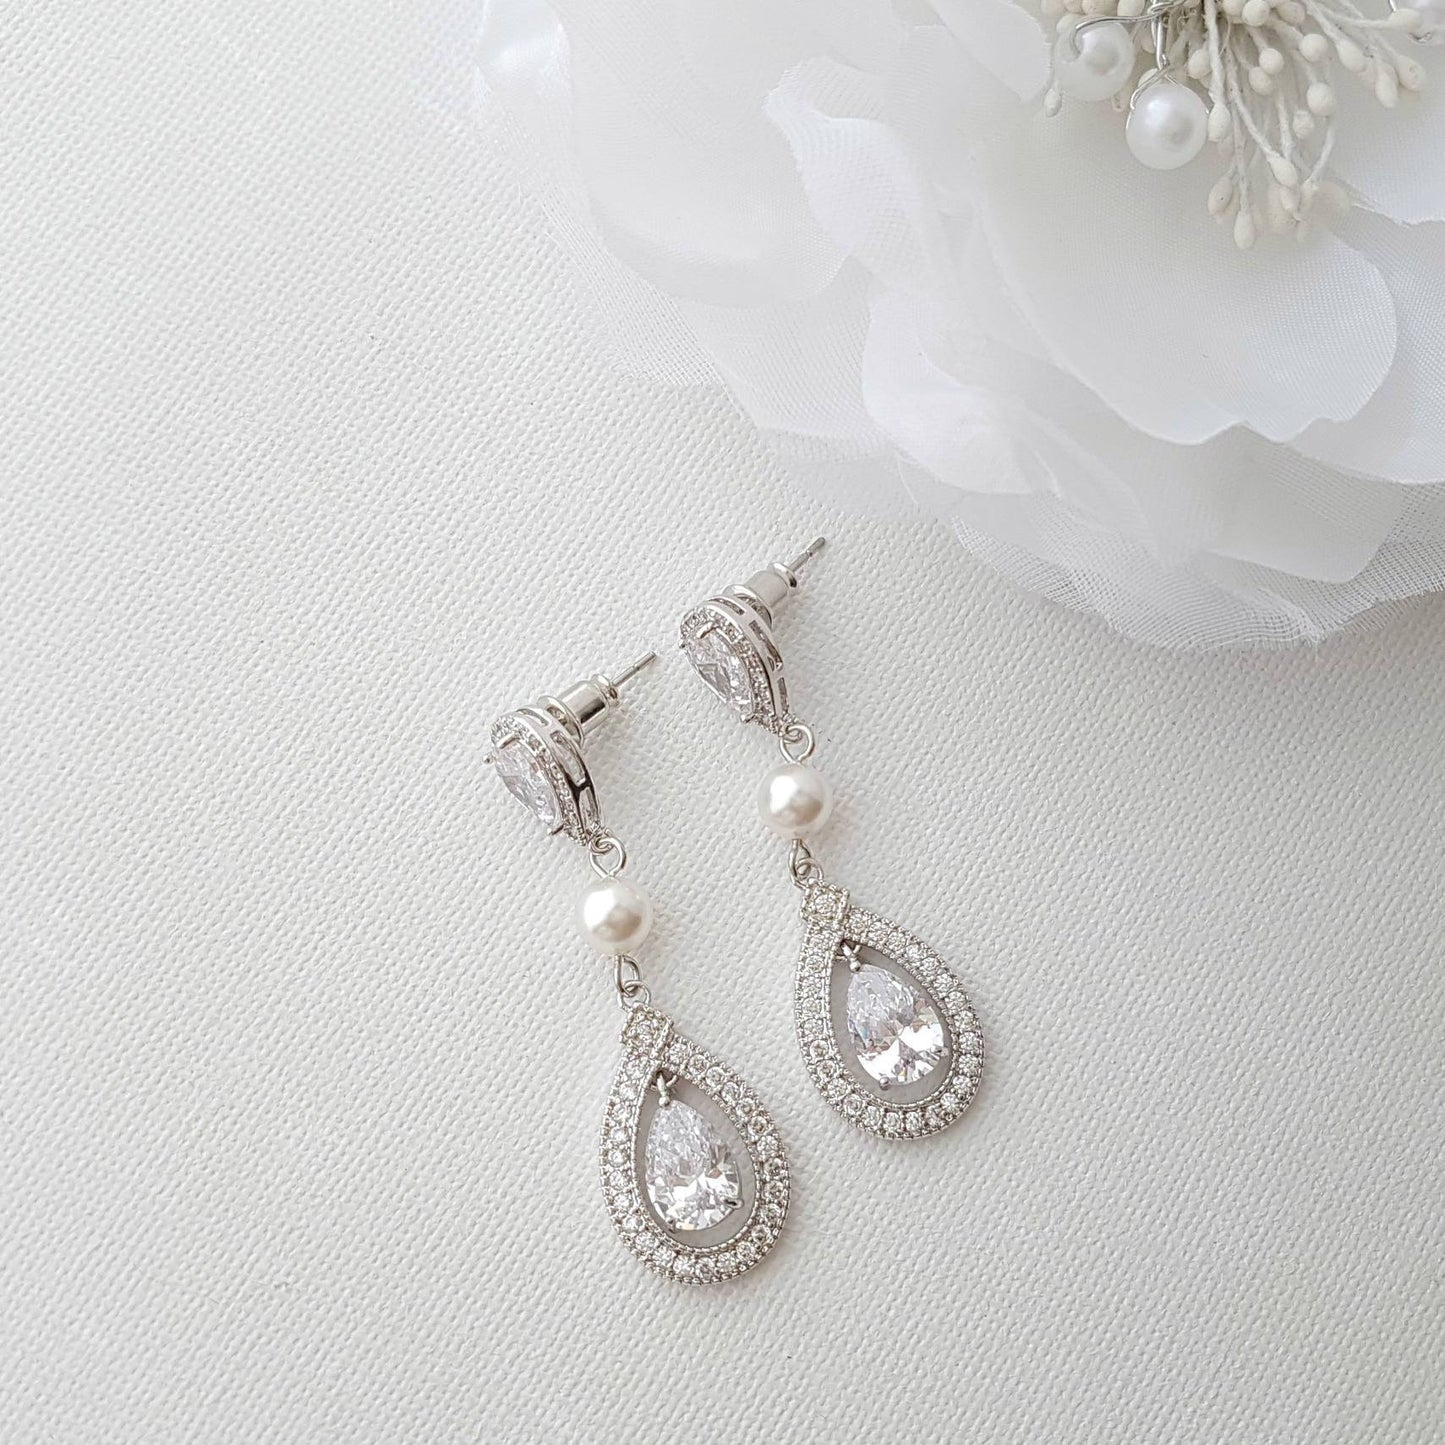 Crystal Wedding Earrings With CZ & Swarovski Pearl- Sarah - PoetryDesigns